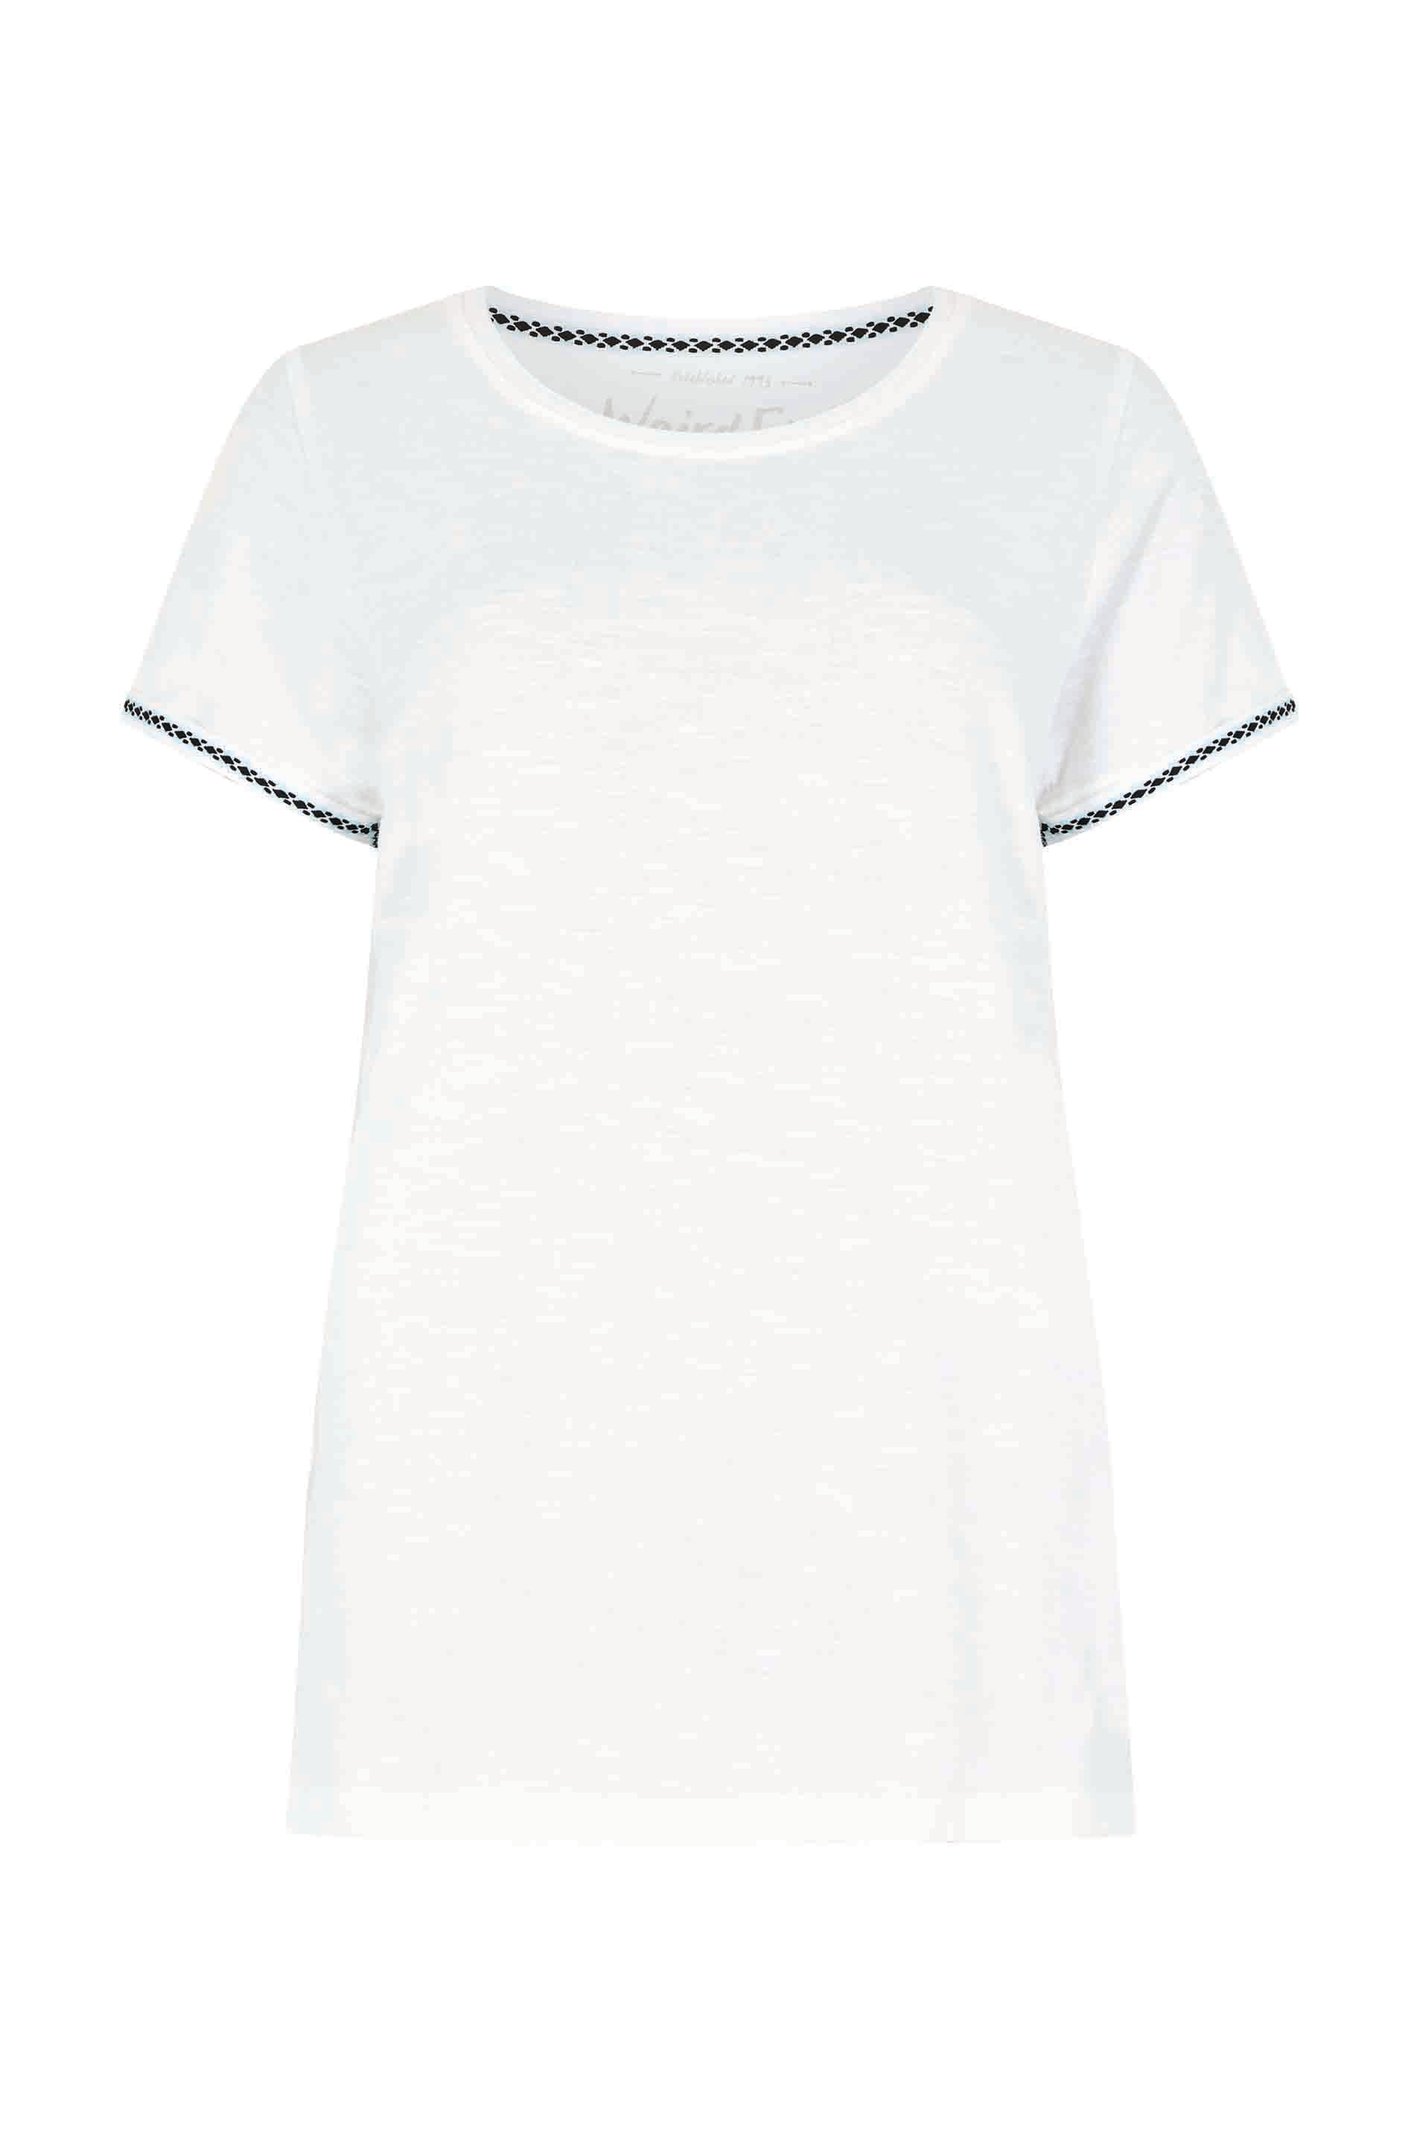 Weird Fish Teya Organic Cotton T-Shirt White Size 12